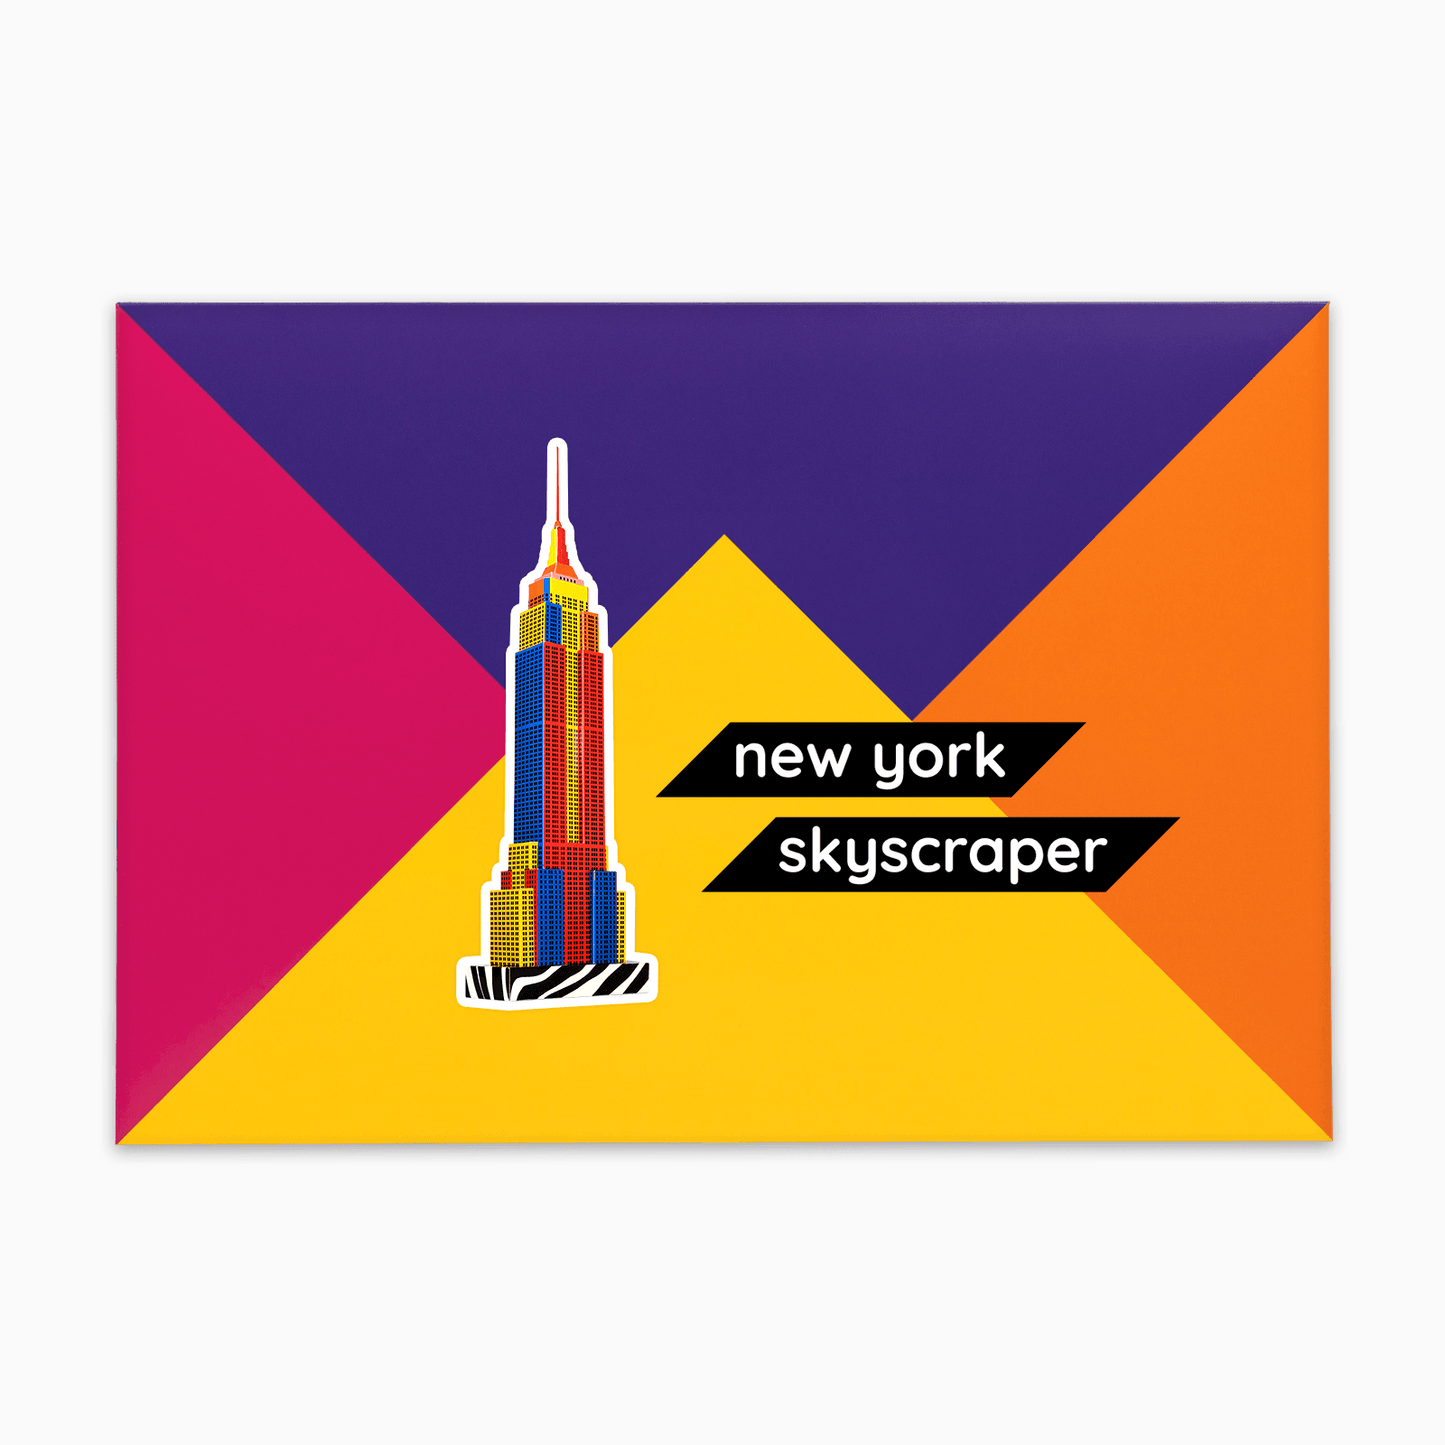 PaperLandmarks New York Skyscraper Eempire State Building Paper Model Kit Gift Packaging